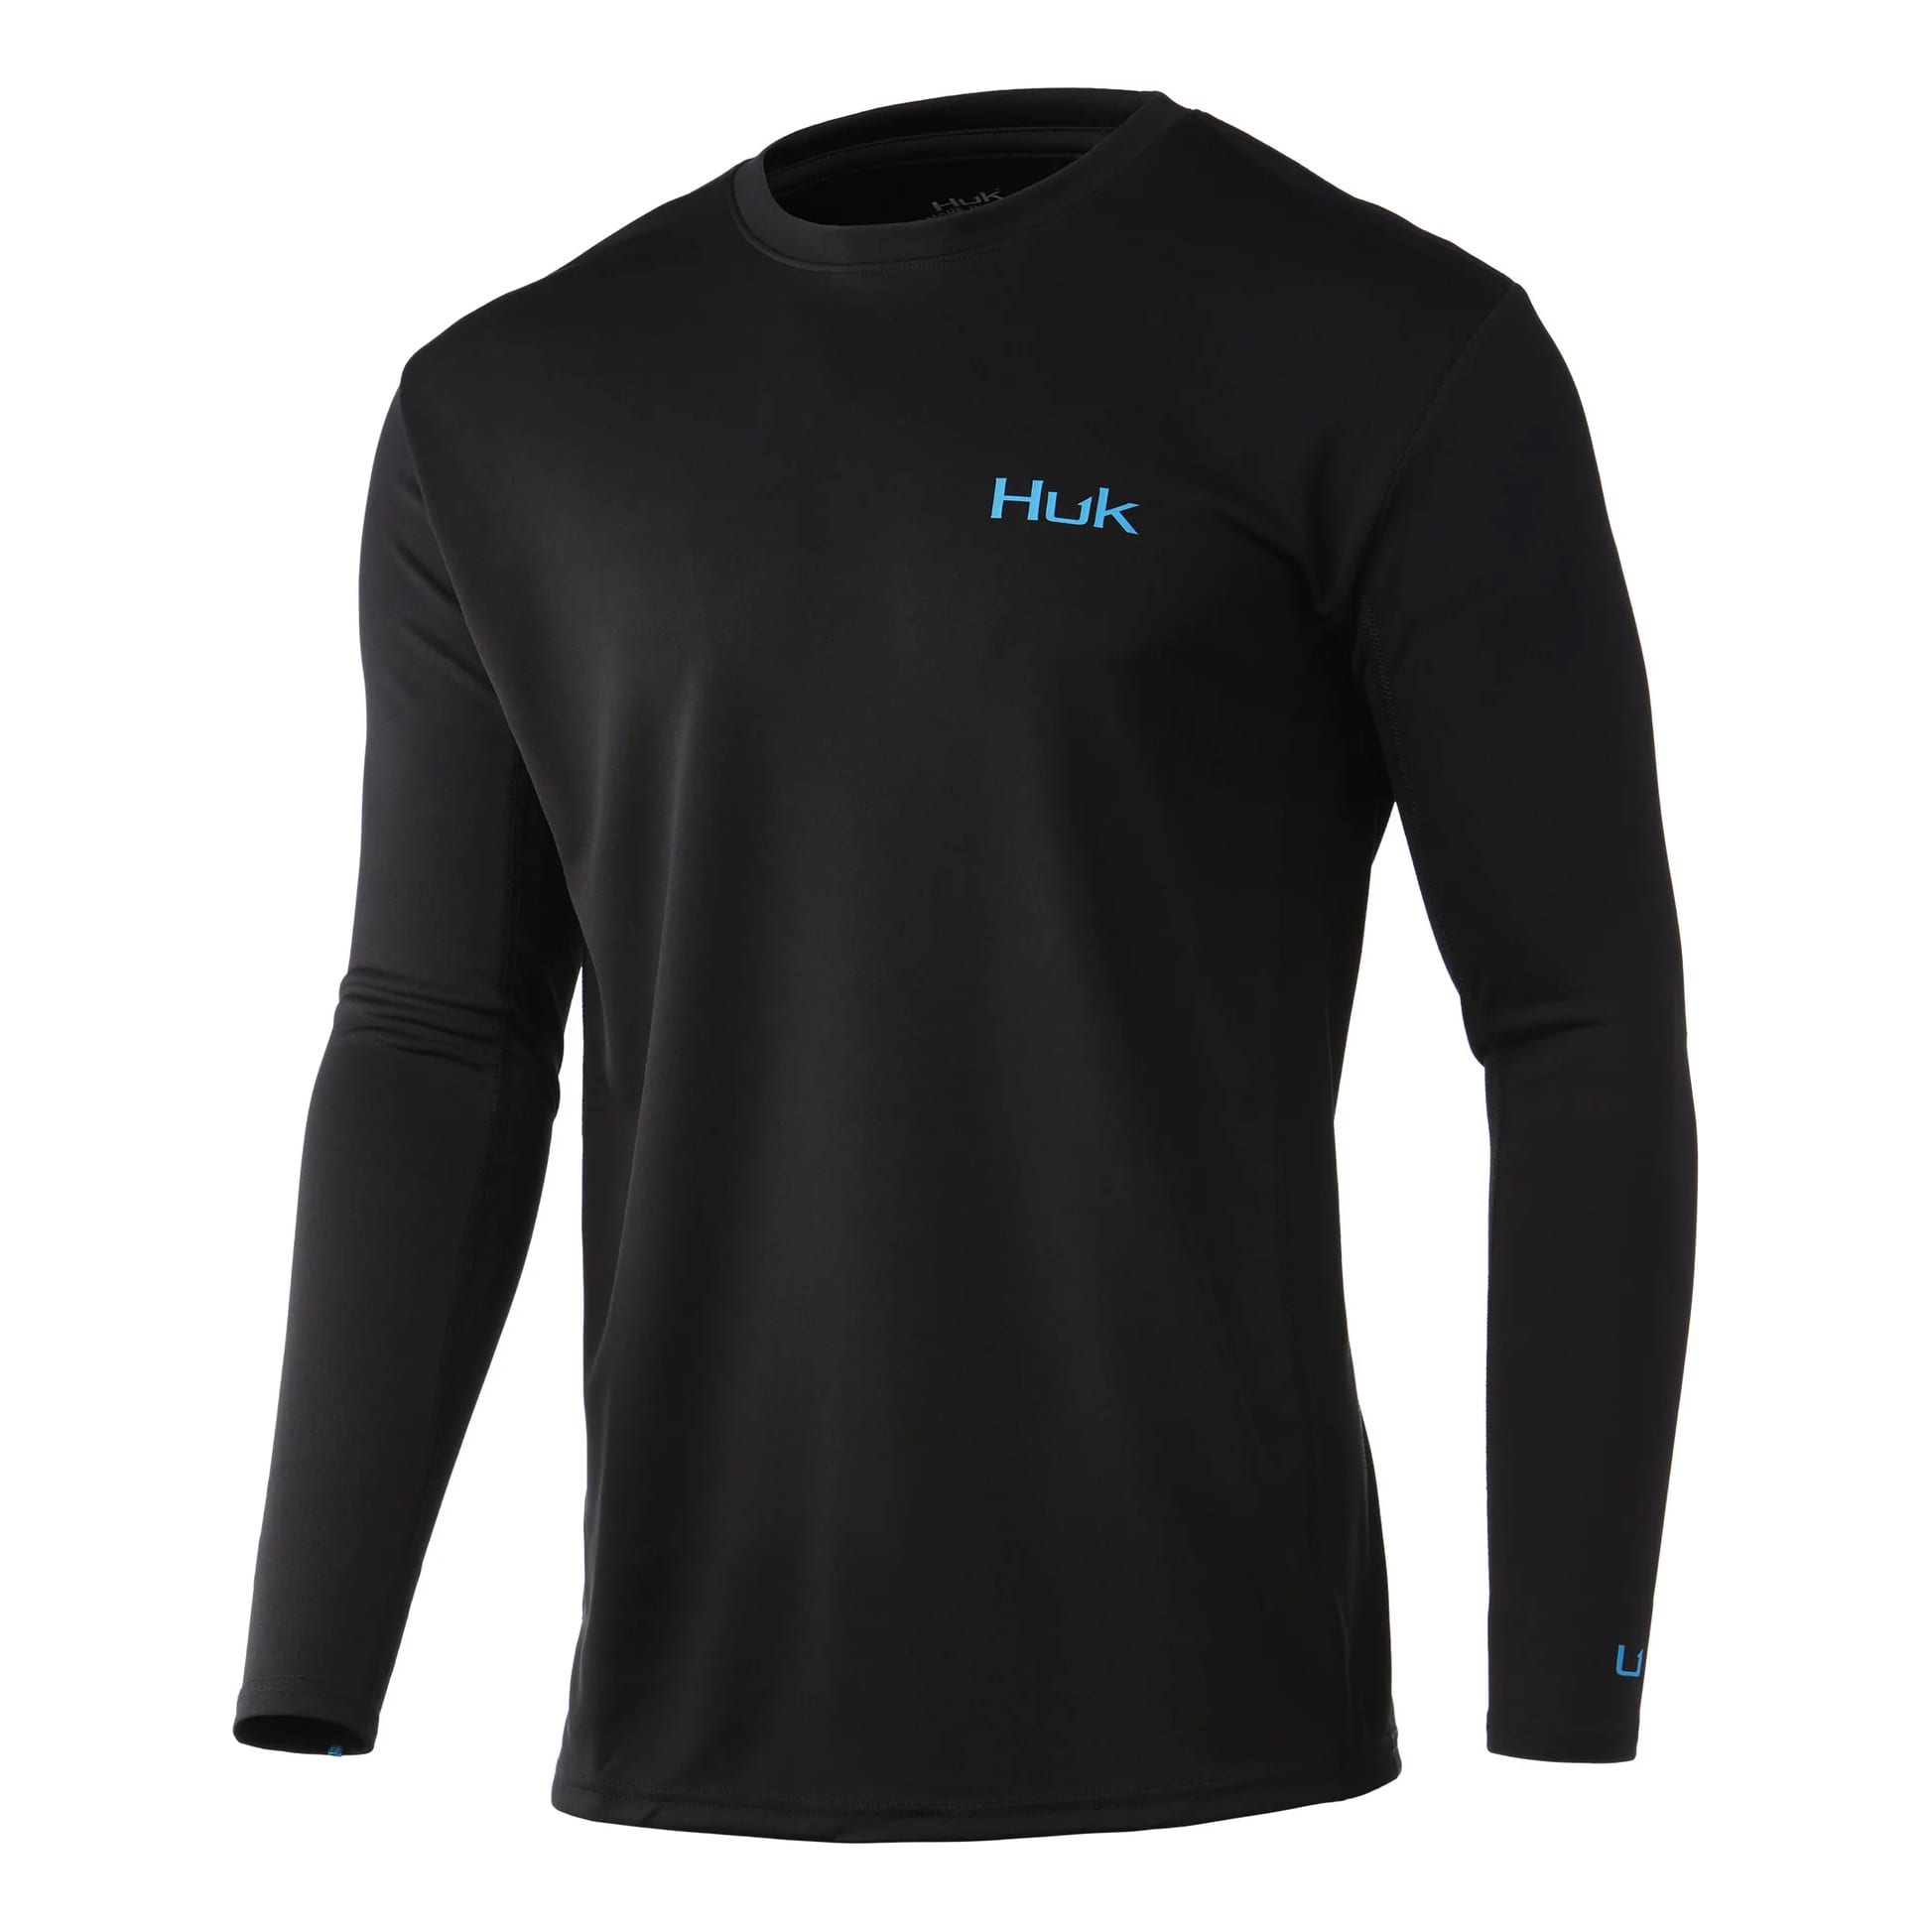 HUk Performance Fishing Shirts Men Long Sleeve Uv Protection Fishing  T-Shirt Camisa Pesca Outdoor Quick